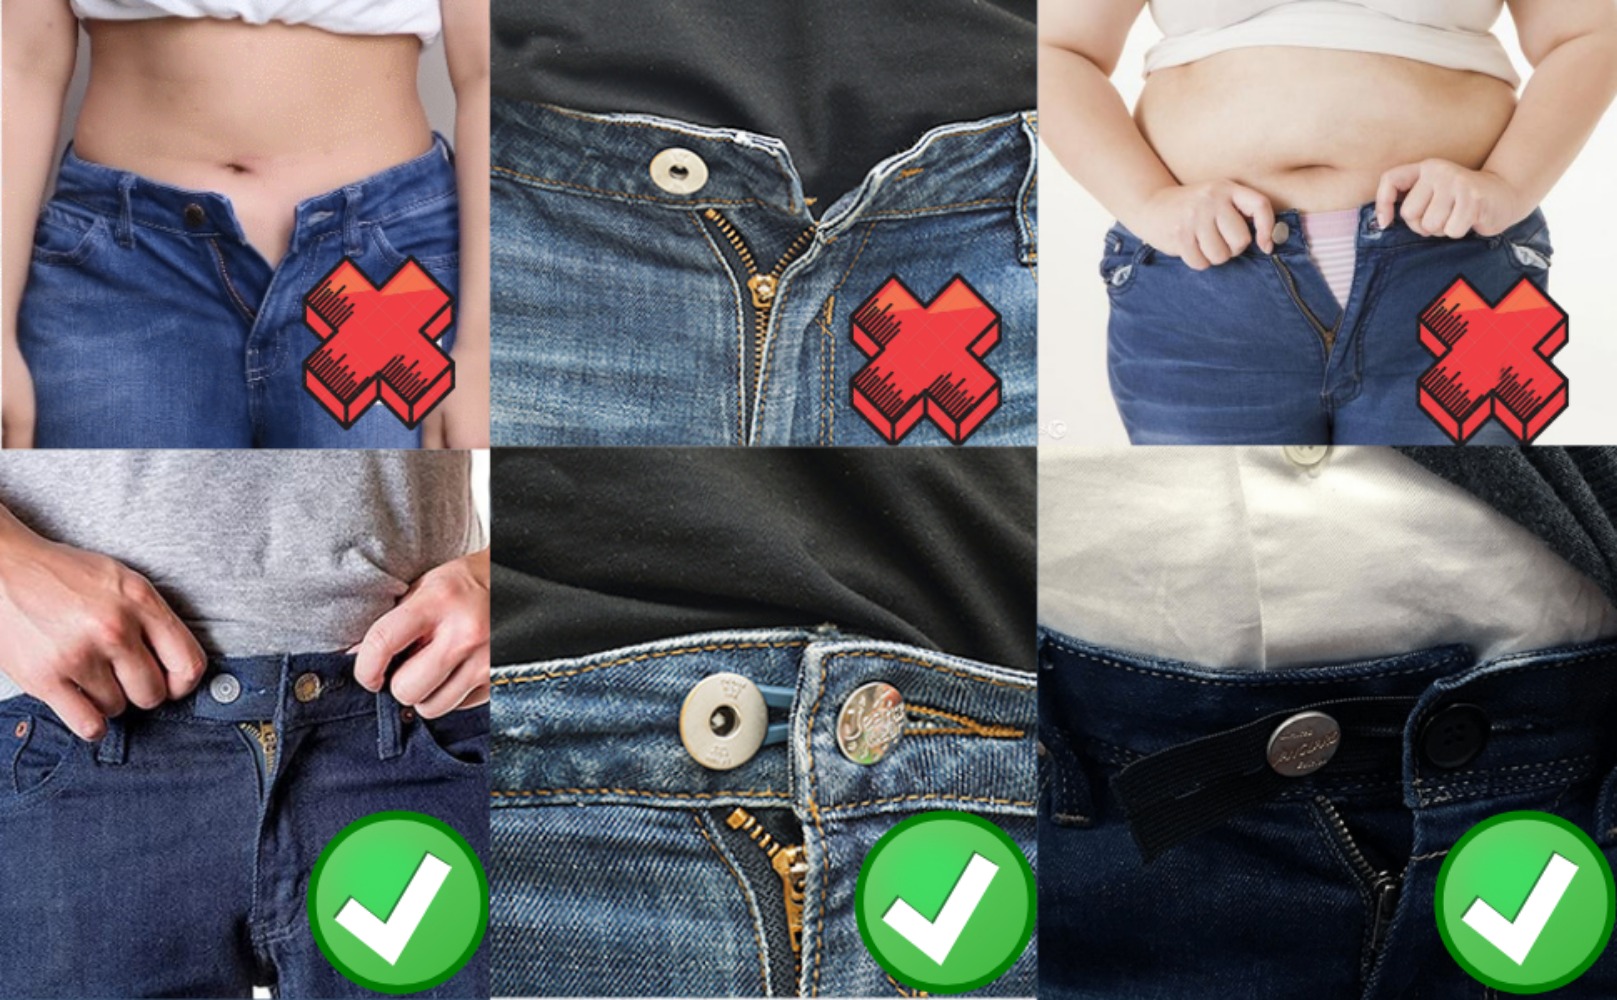 15mm/18mm Pants Extender Buttons Flexible Waist Extenders for Jeans Pants  for Women & Men Pregnancy Jeans Skirt - AliExpress